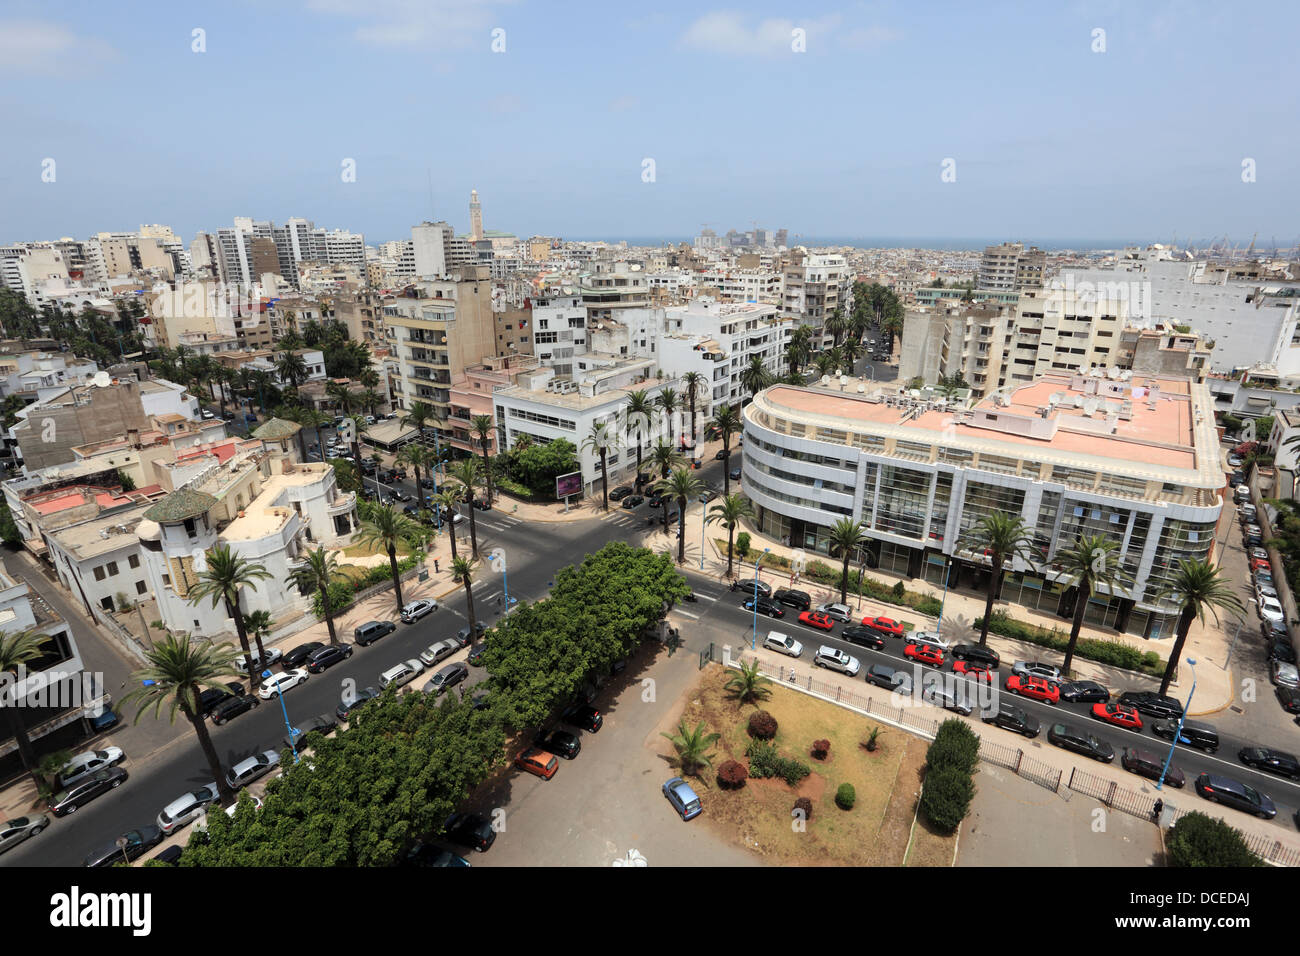 View over the city of Casablanca, Morocco Stock Photo